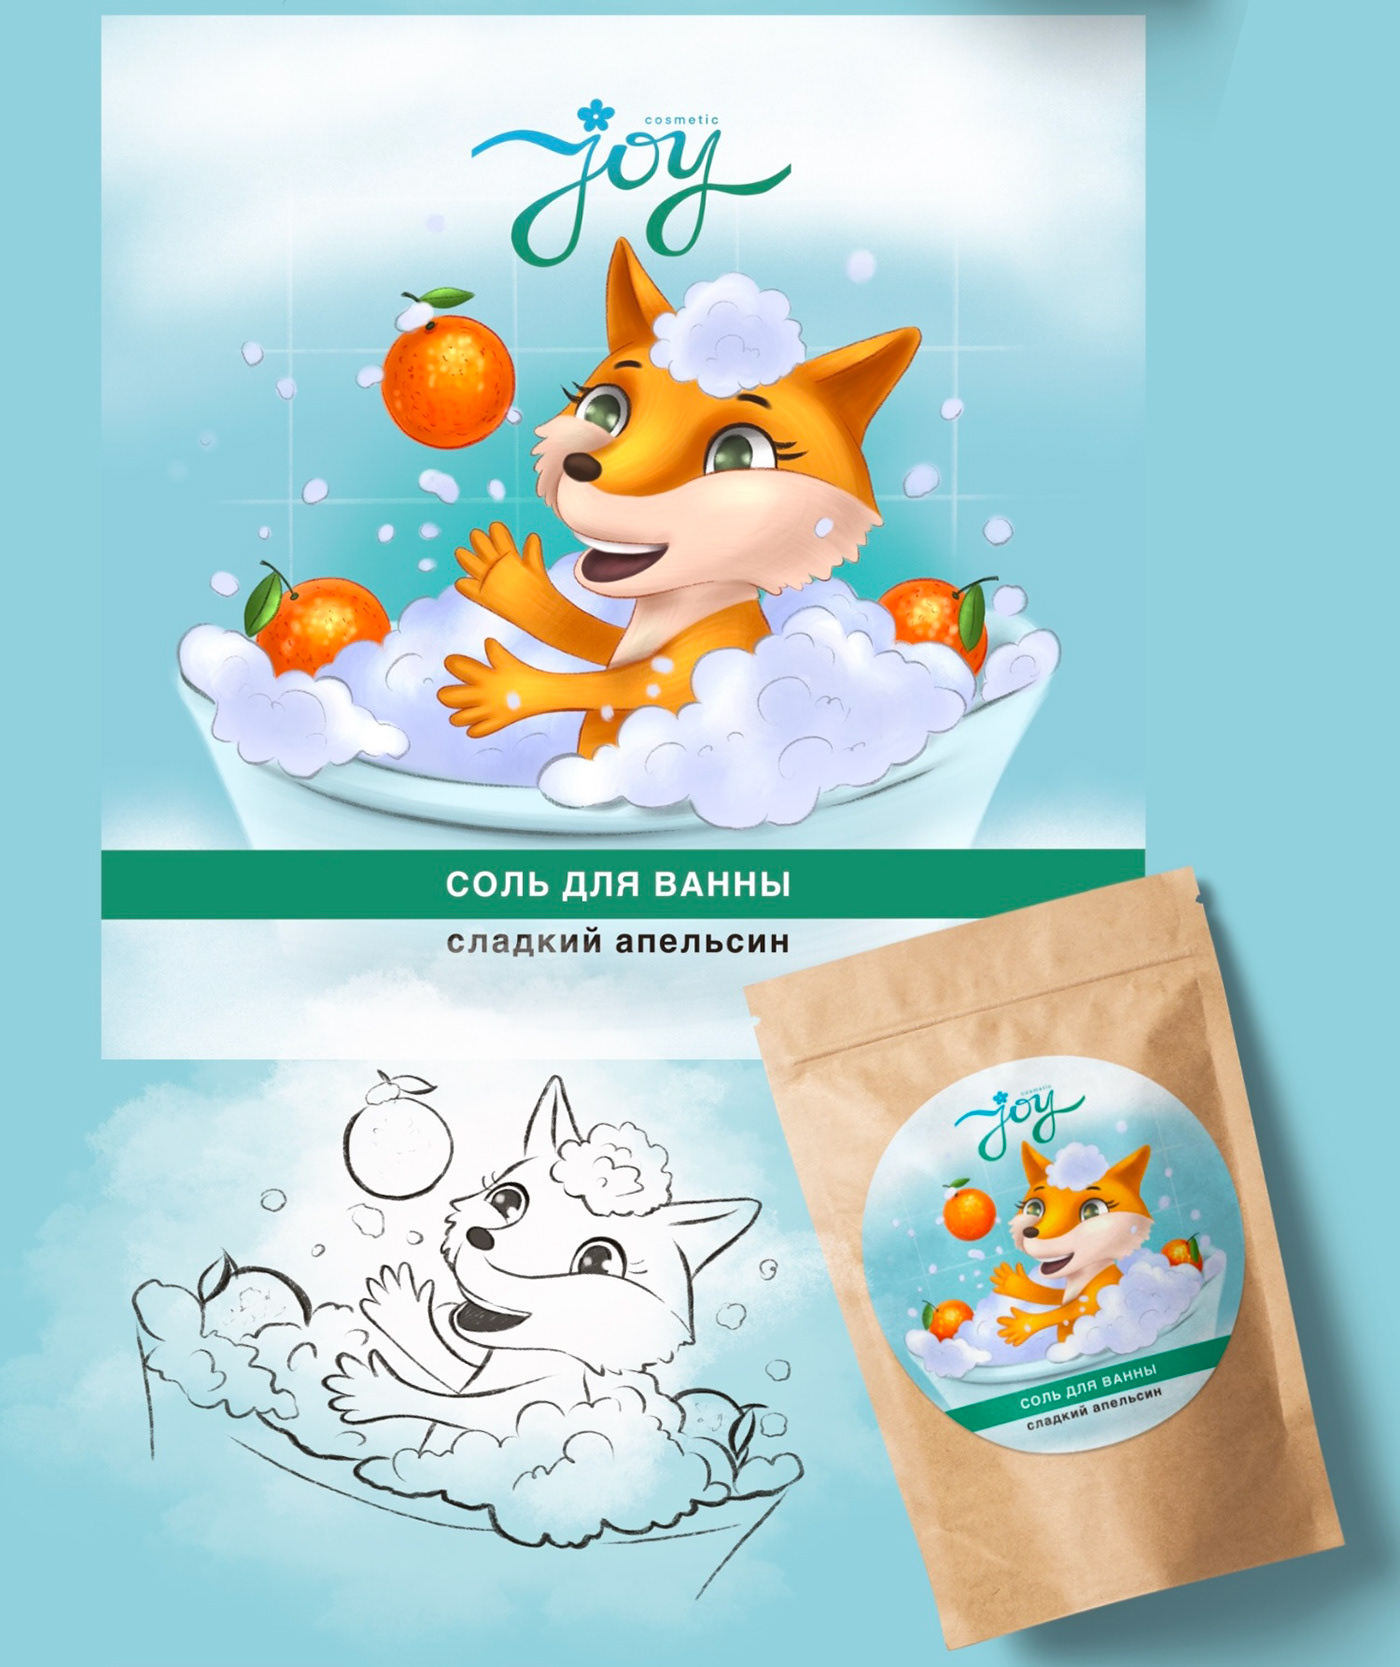 animal character character illustration packaging illustration иллюстрации для упаковки